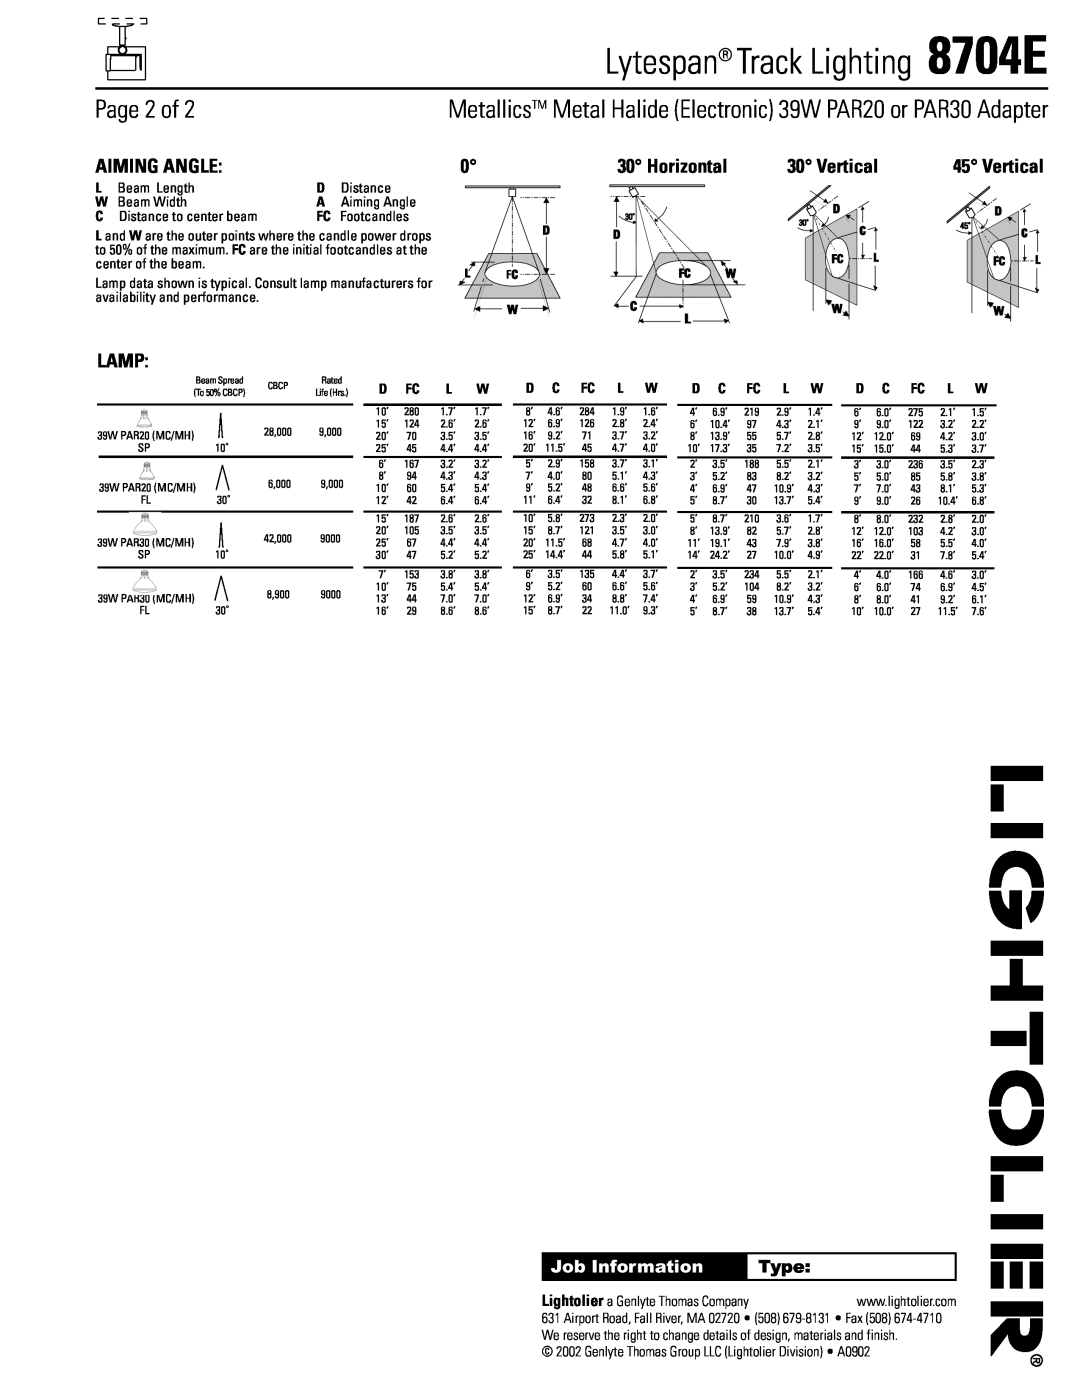 Lightolier 8704E manual Aiming Angle, Horizontal, Vertical, Lamp, Lytespan Track Lighting, Page 2 of, Job Information, Type 